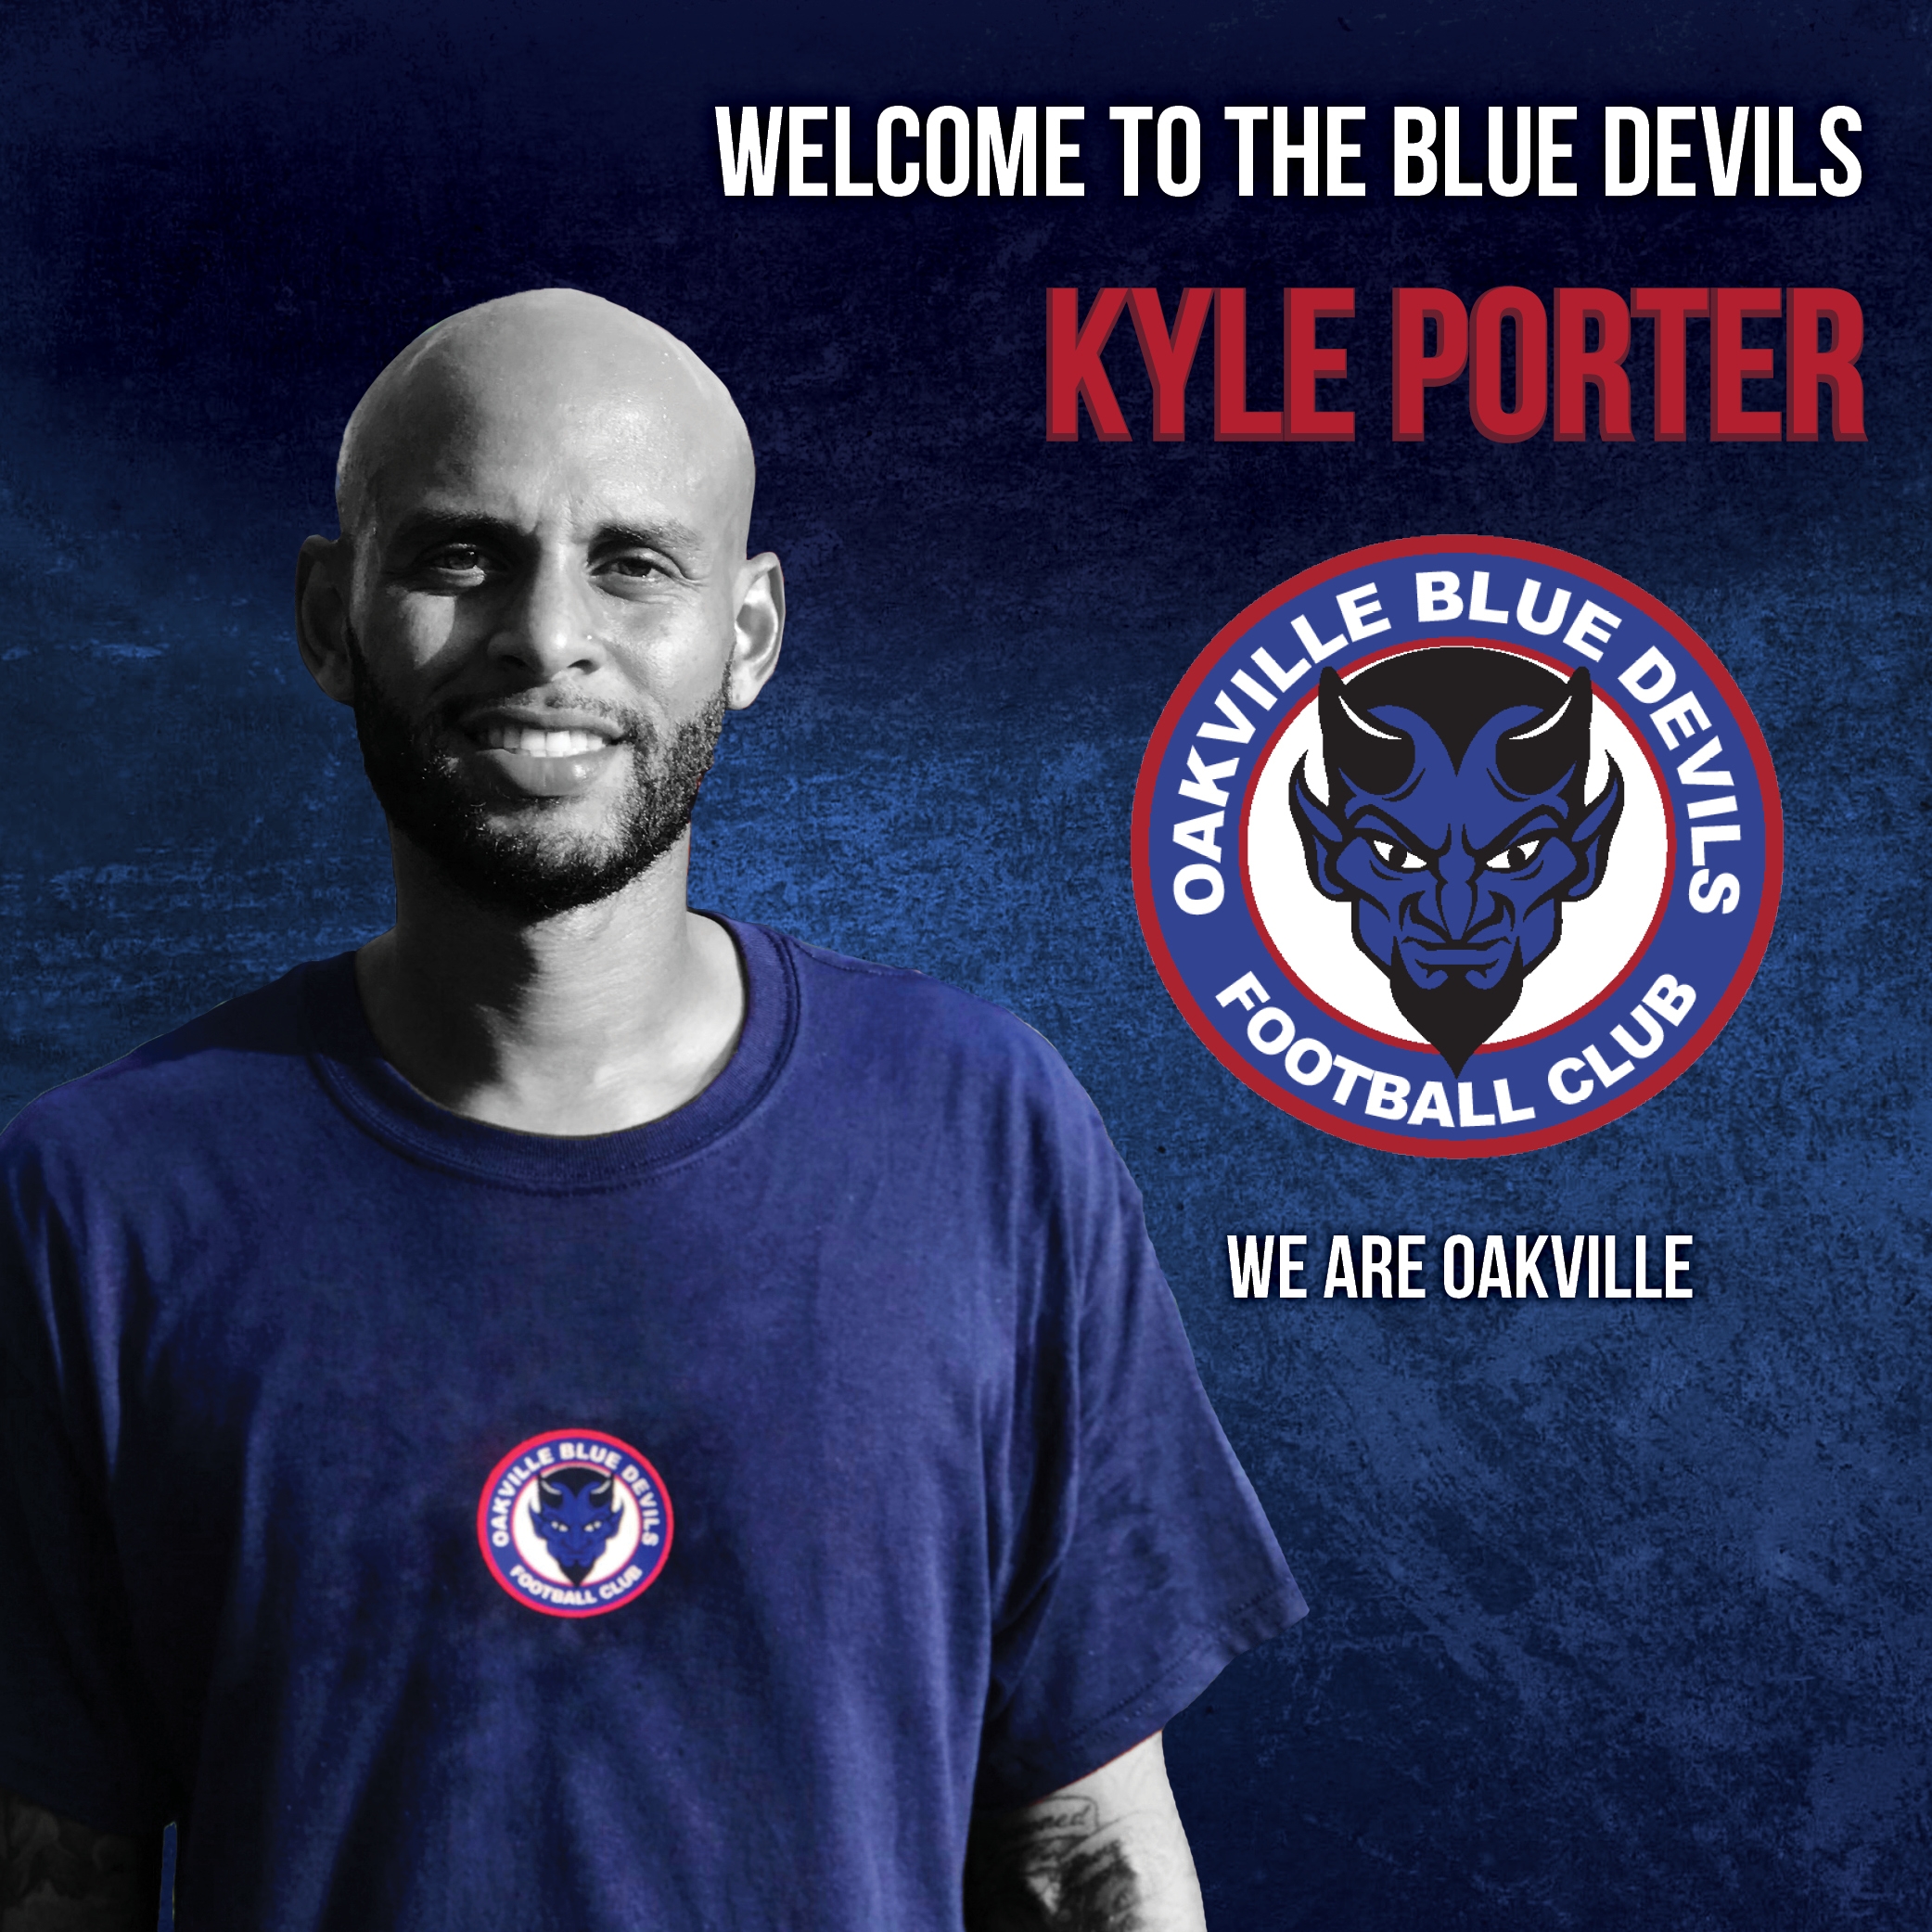 Kyle Porter